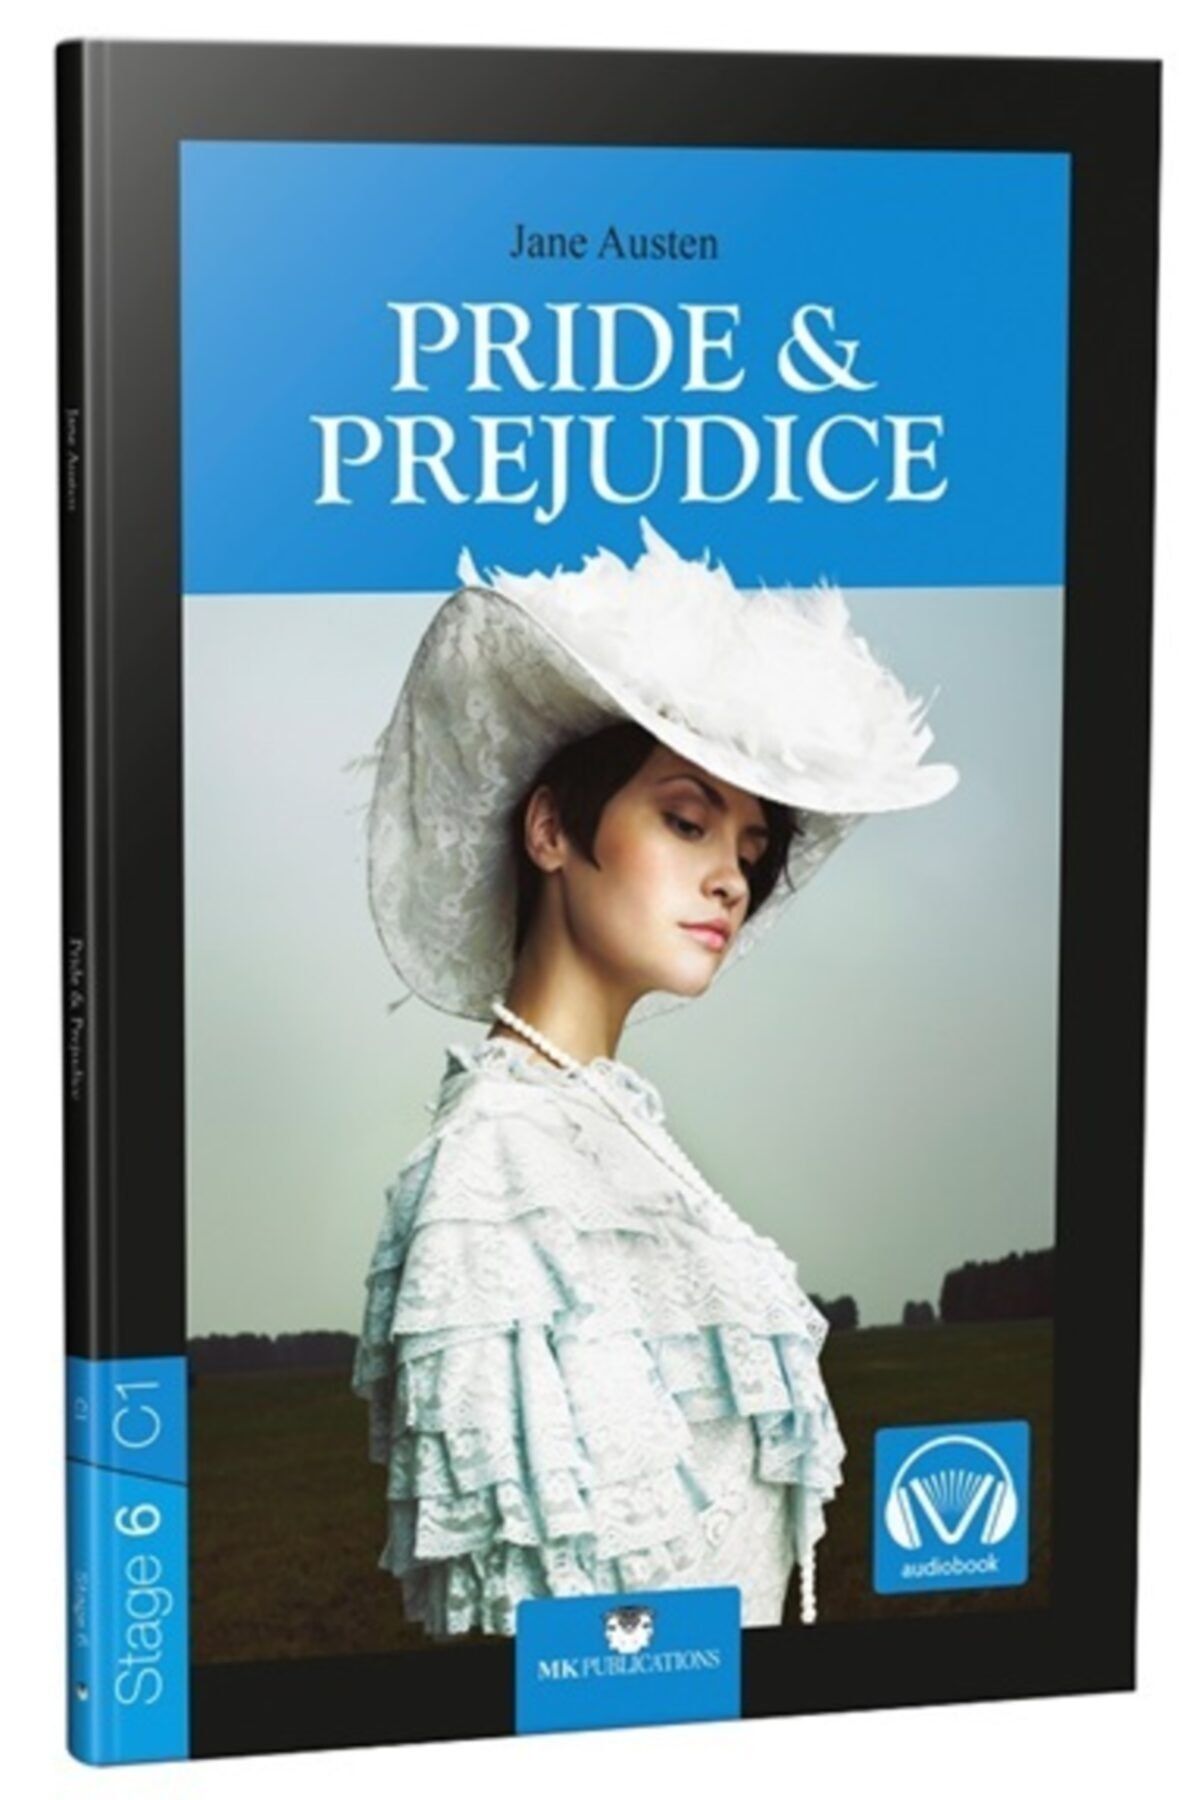 MK Publications Stage 6 Pride And Prejudice